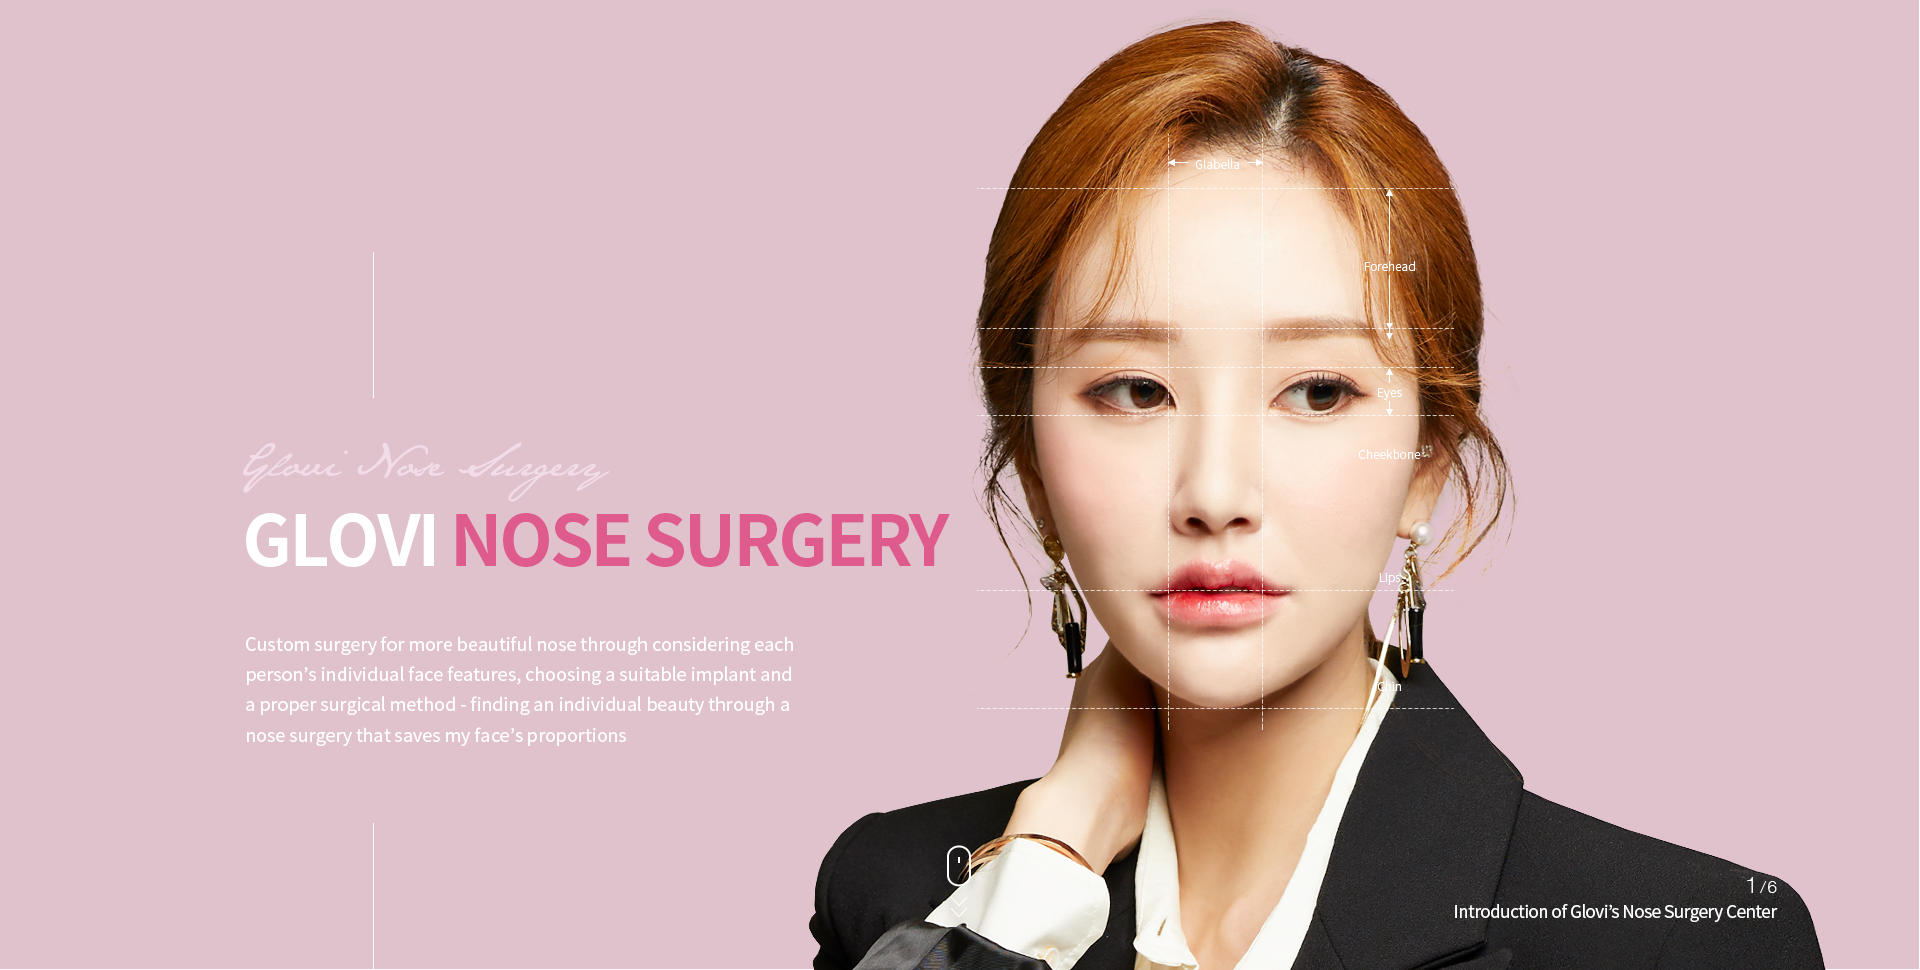 Glovi nose surgery img